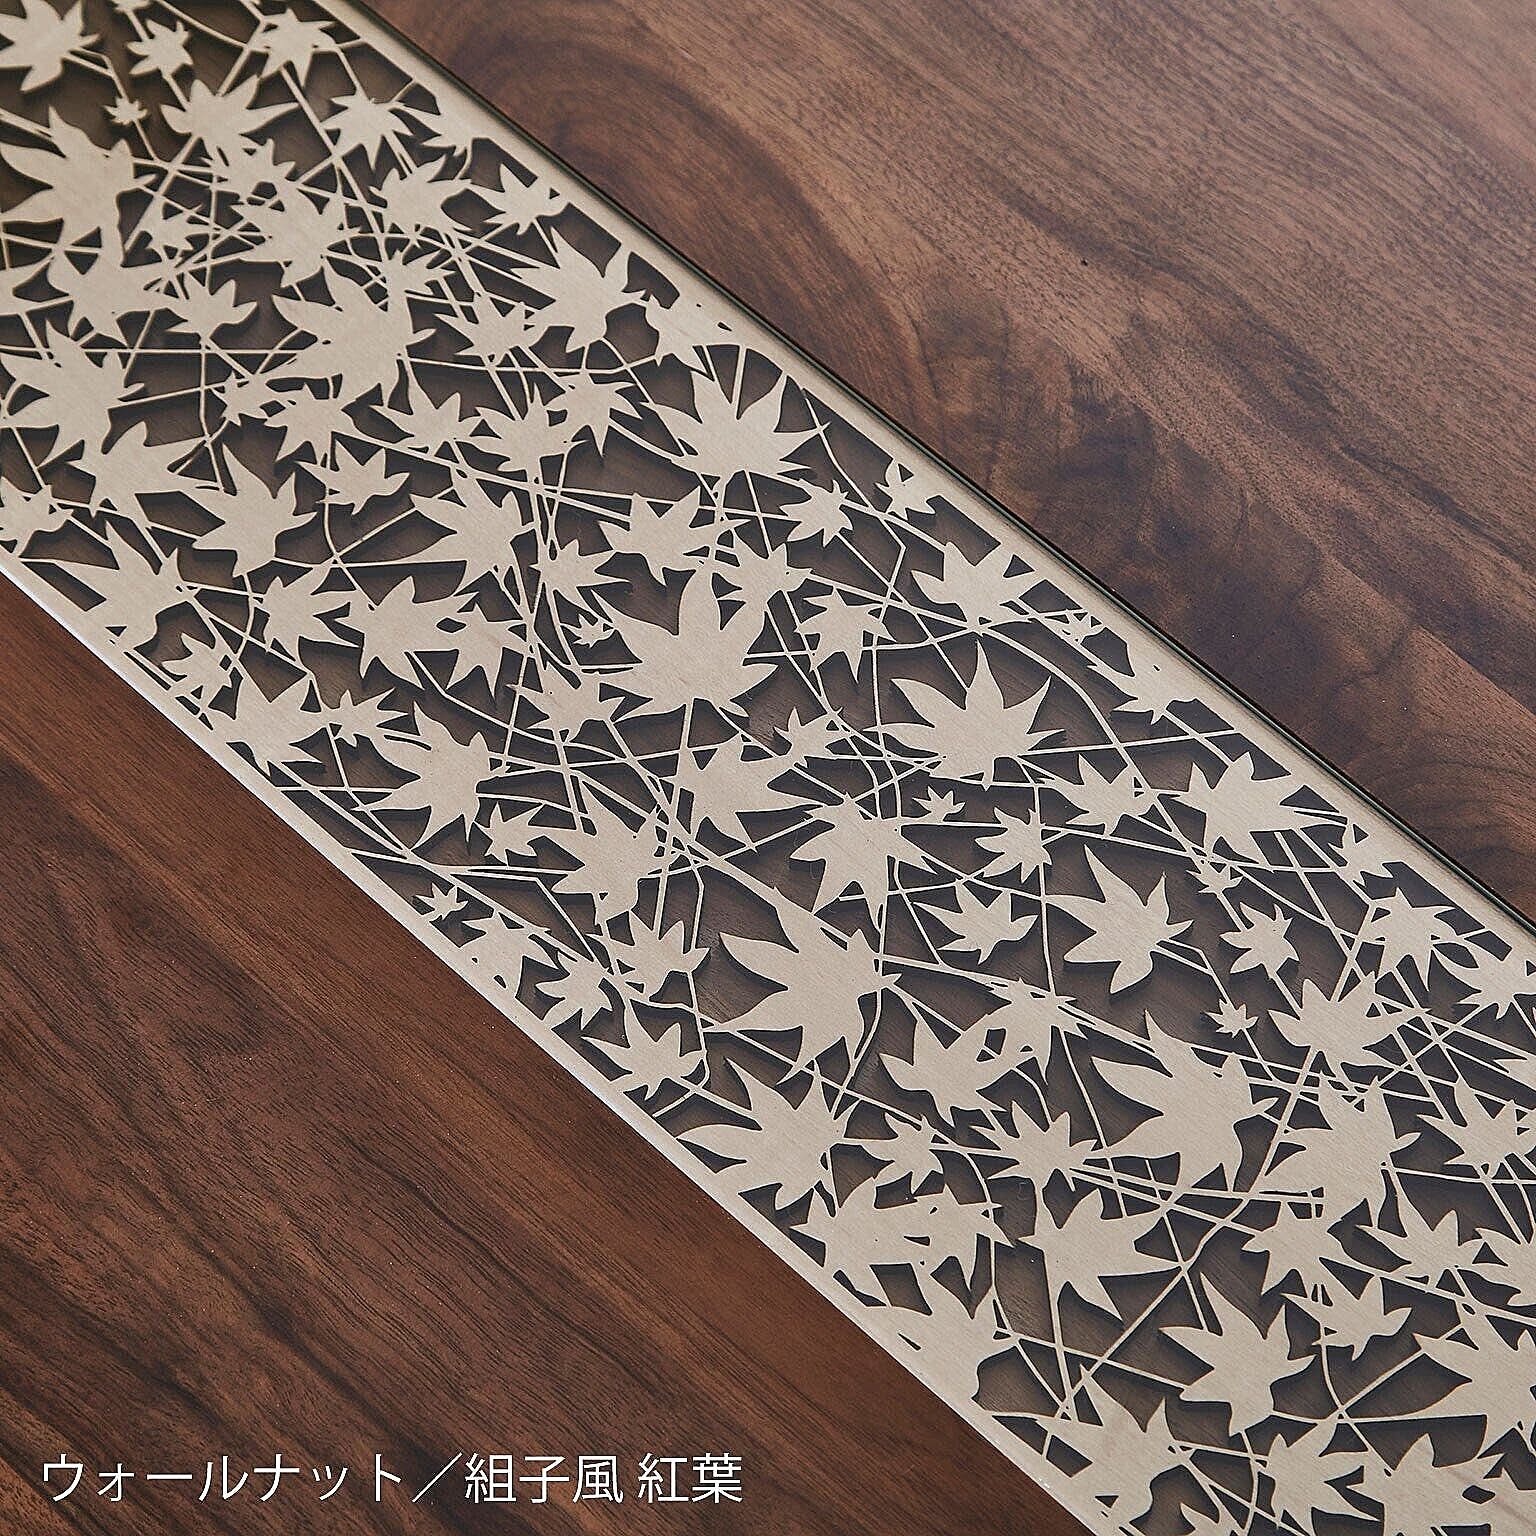 Artisan 天然木 アーチザン ダイニングテーブル 無垢 一枚板風 耳付き 組子風 ウォールナット 幅210cm